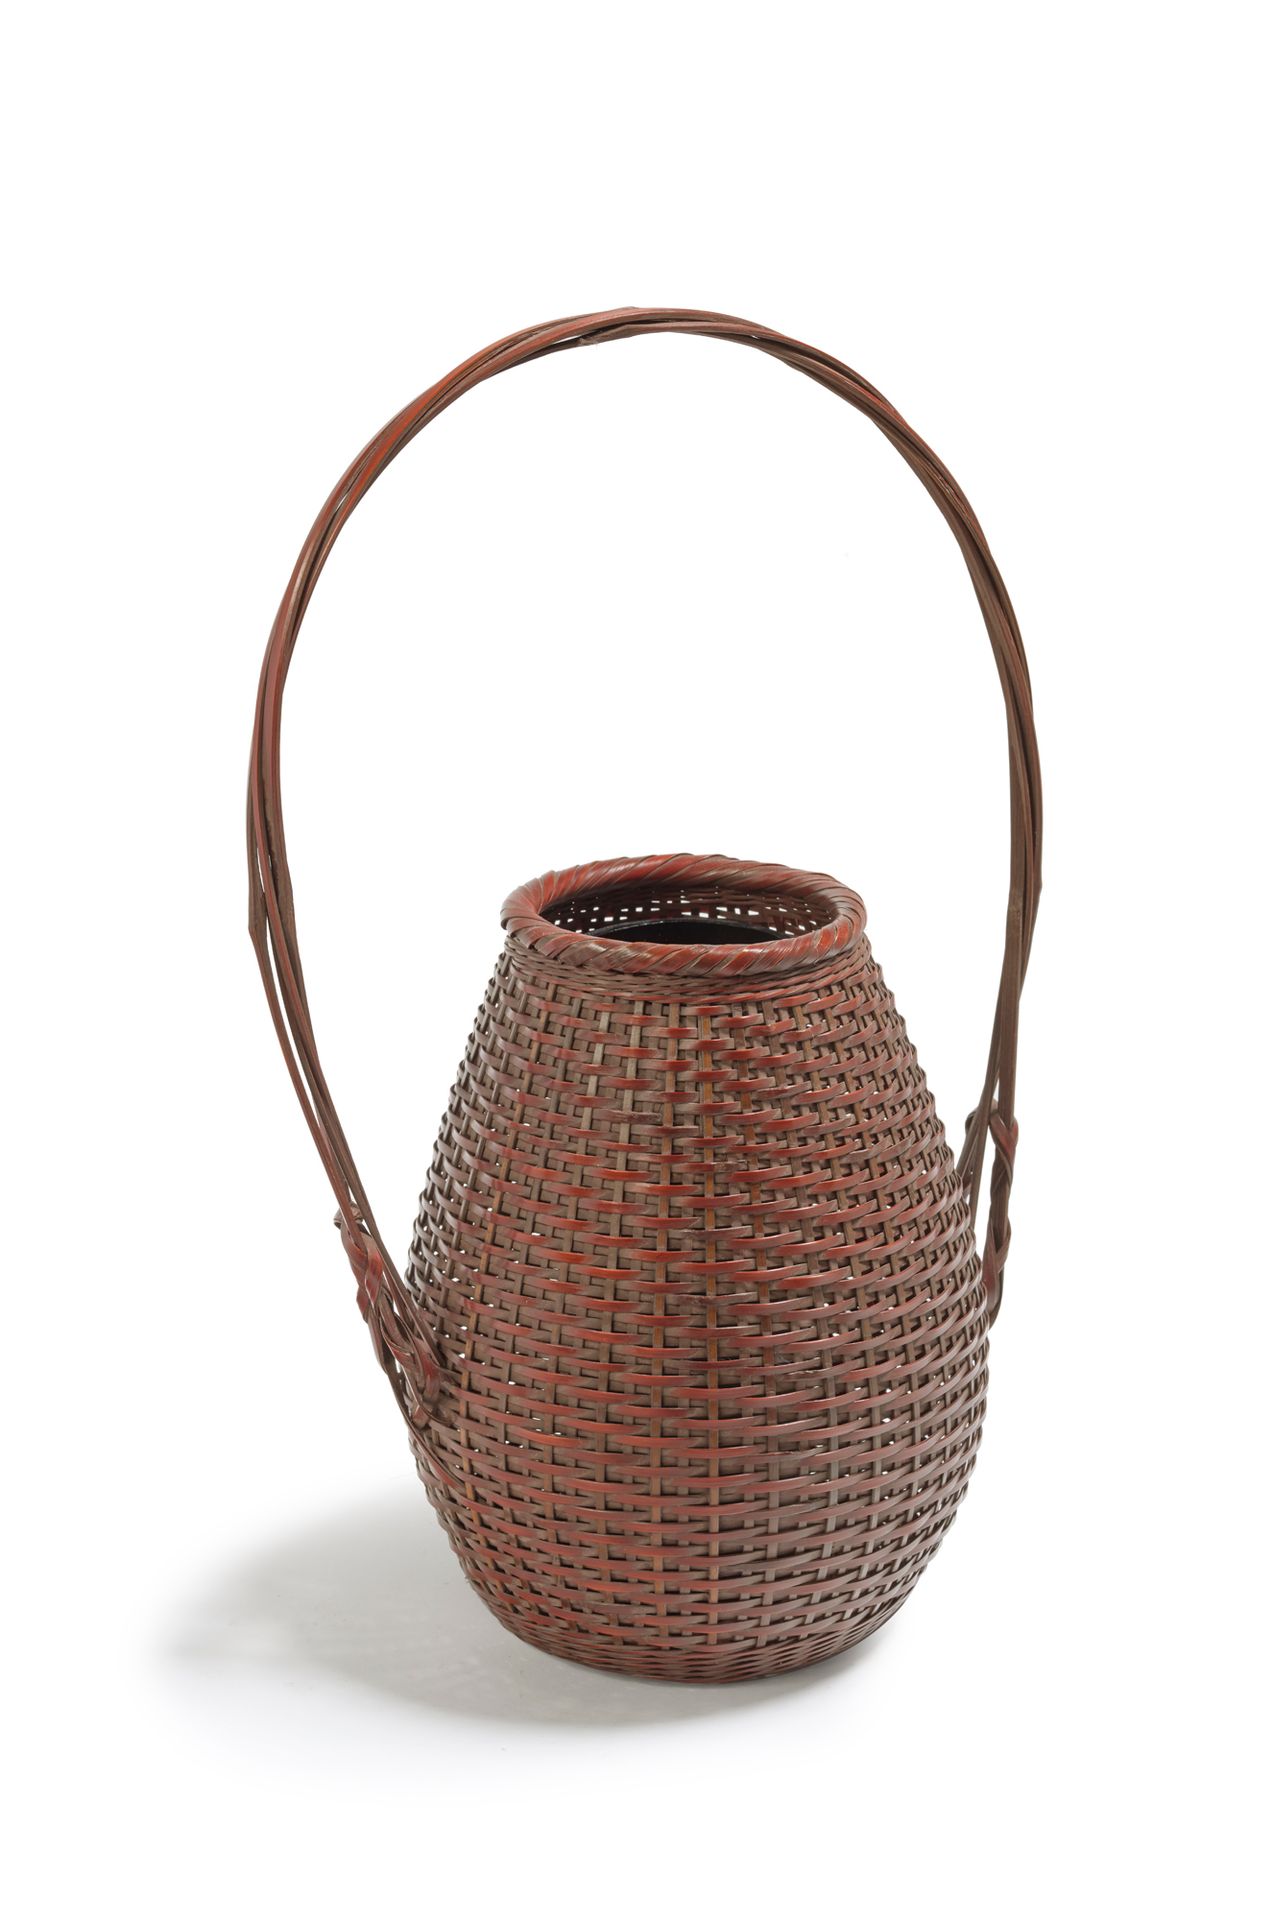 JAPON - XXe siècle 红棕色的竹制花篮，呈卵形，有规则的横向编织，颈部以斜向编织结束，手柄由四股绞合而成。
，签名为Honan。
，高35厘米。